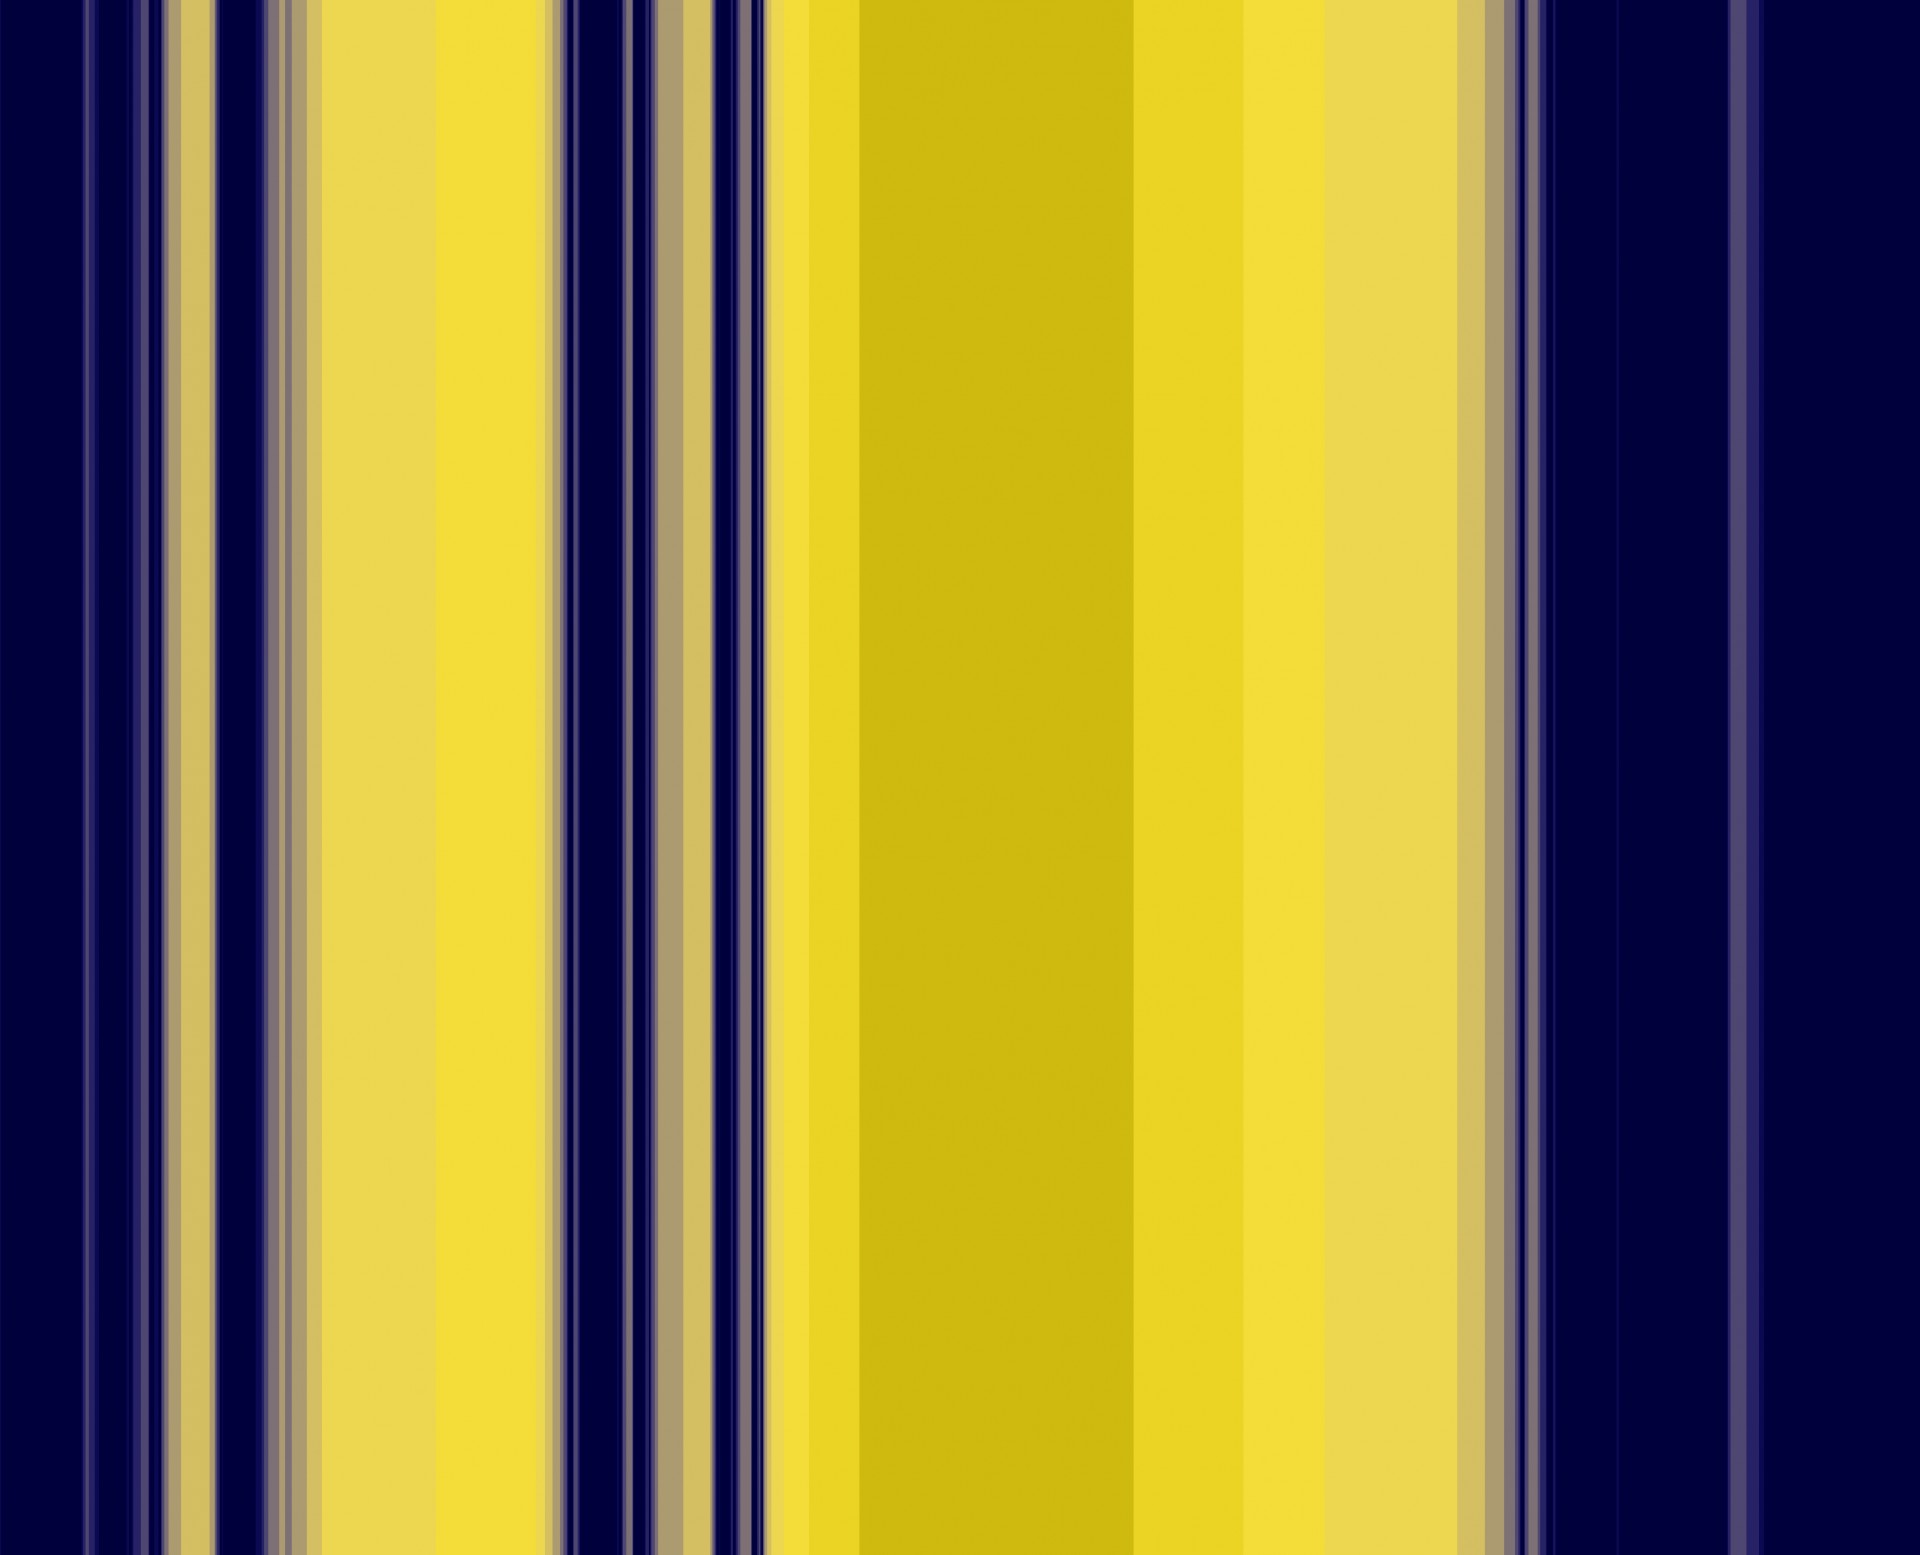 Yellow Blue Background Stripes